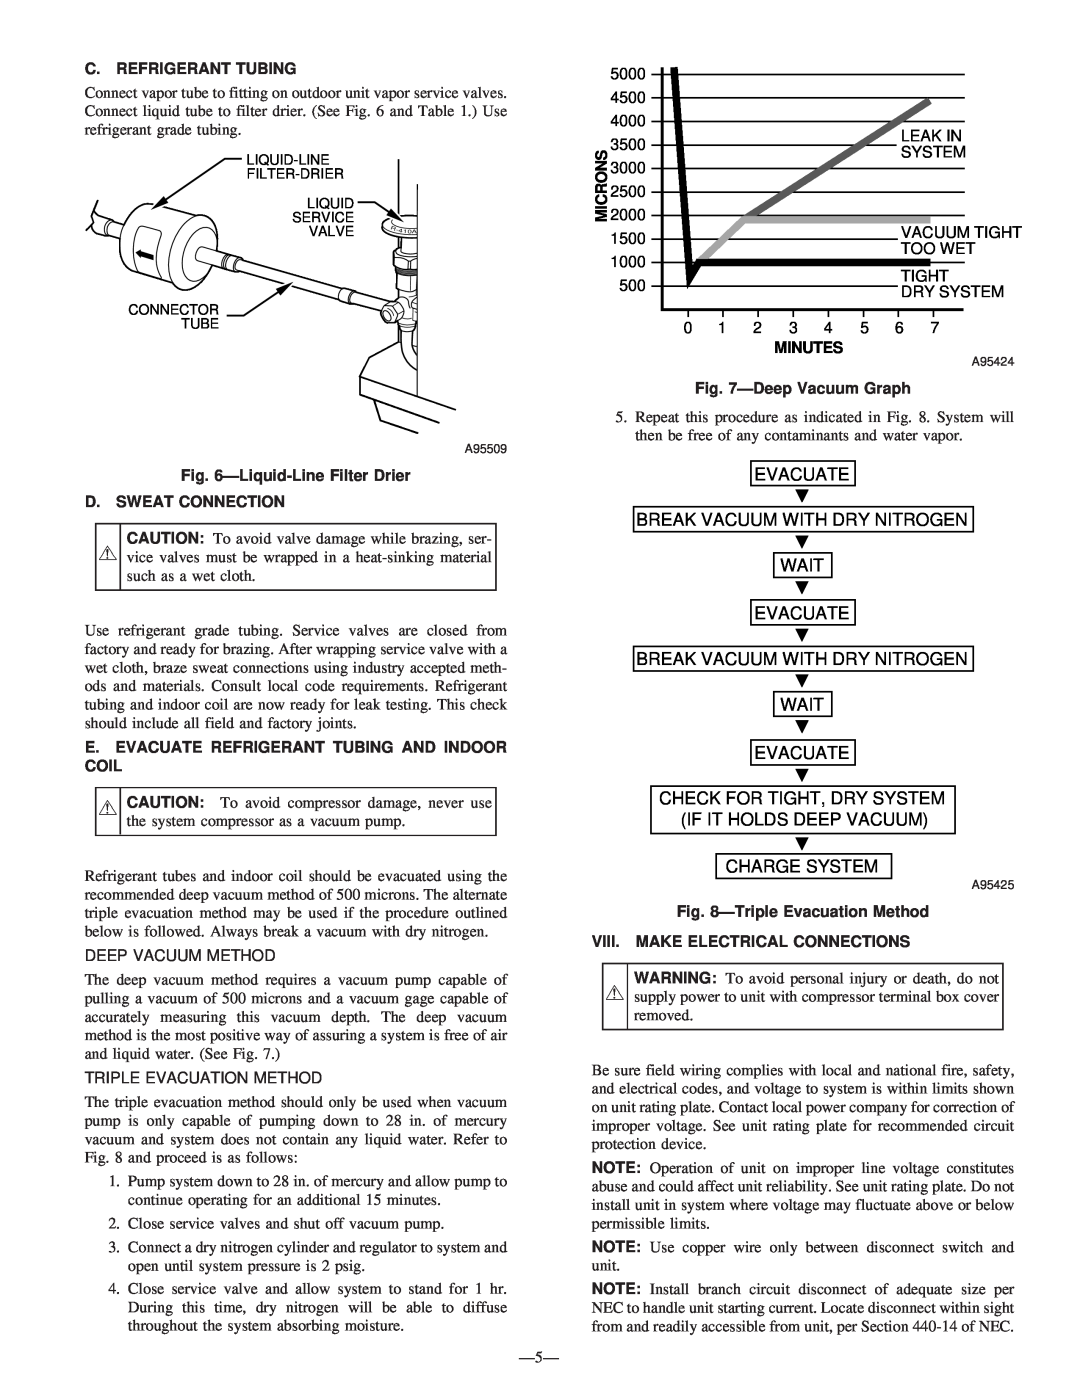 Bryant 591B C. Refrigerant Tubing, Liquid-LineFilter Drier, D. Sweat Connection, Deep Vacuum Method, DeepVacuum Graph 